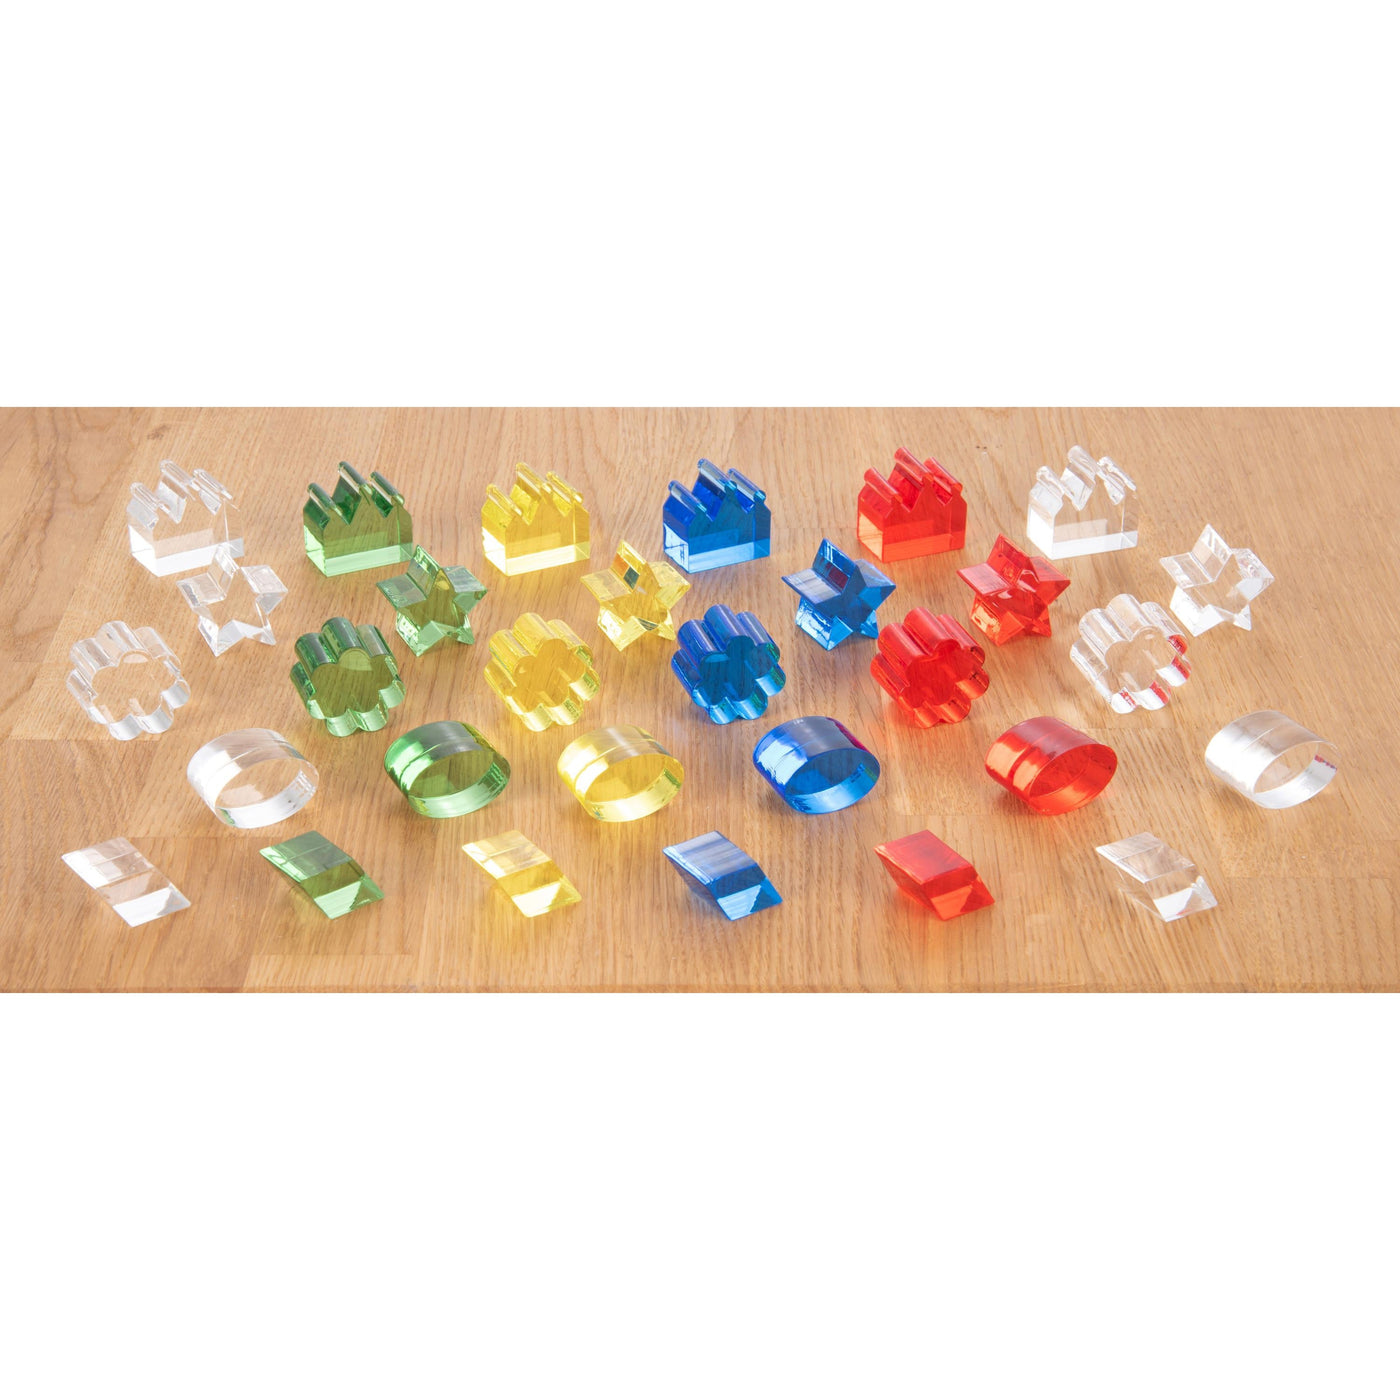 TickiT Colour Crystal Treasures